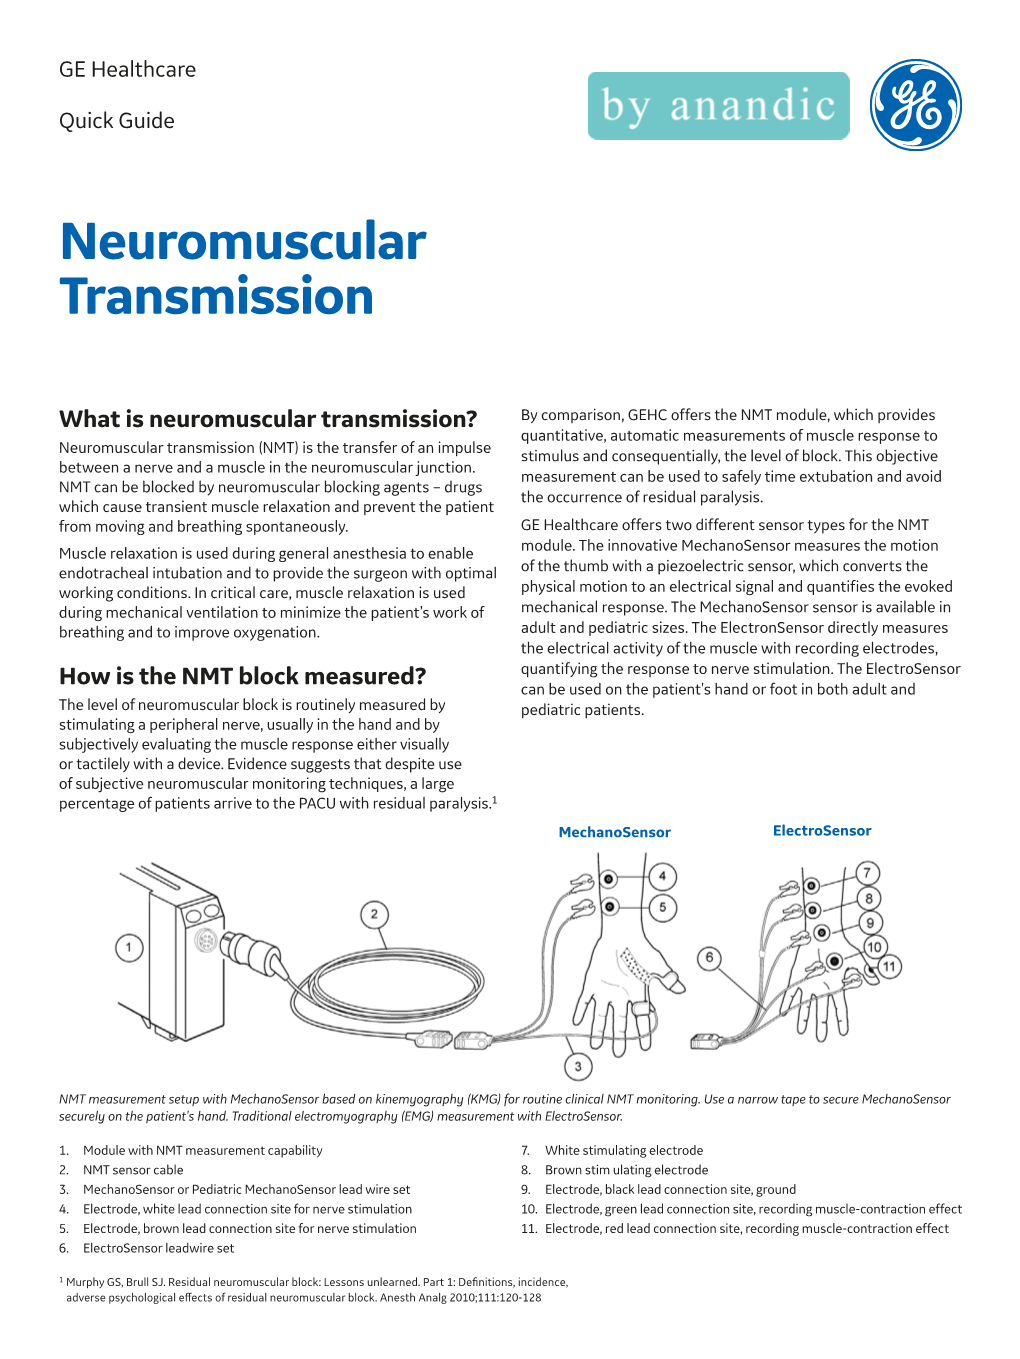 Neuromuscular Transmission